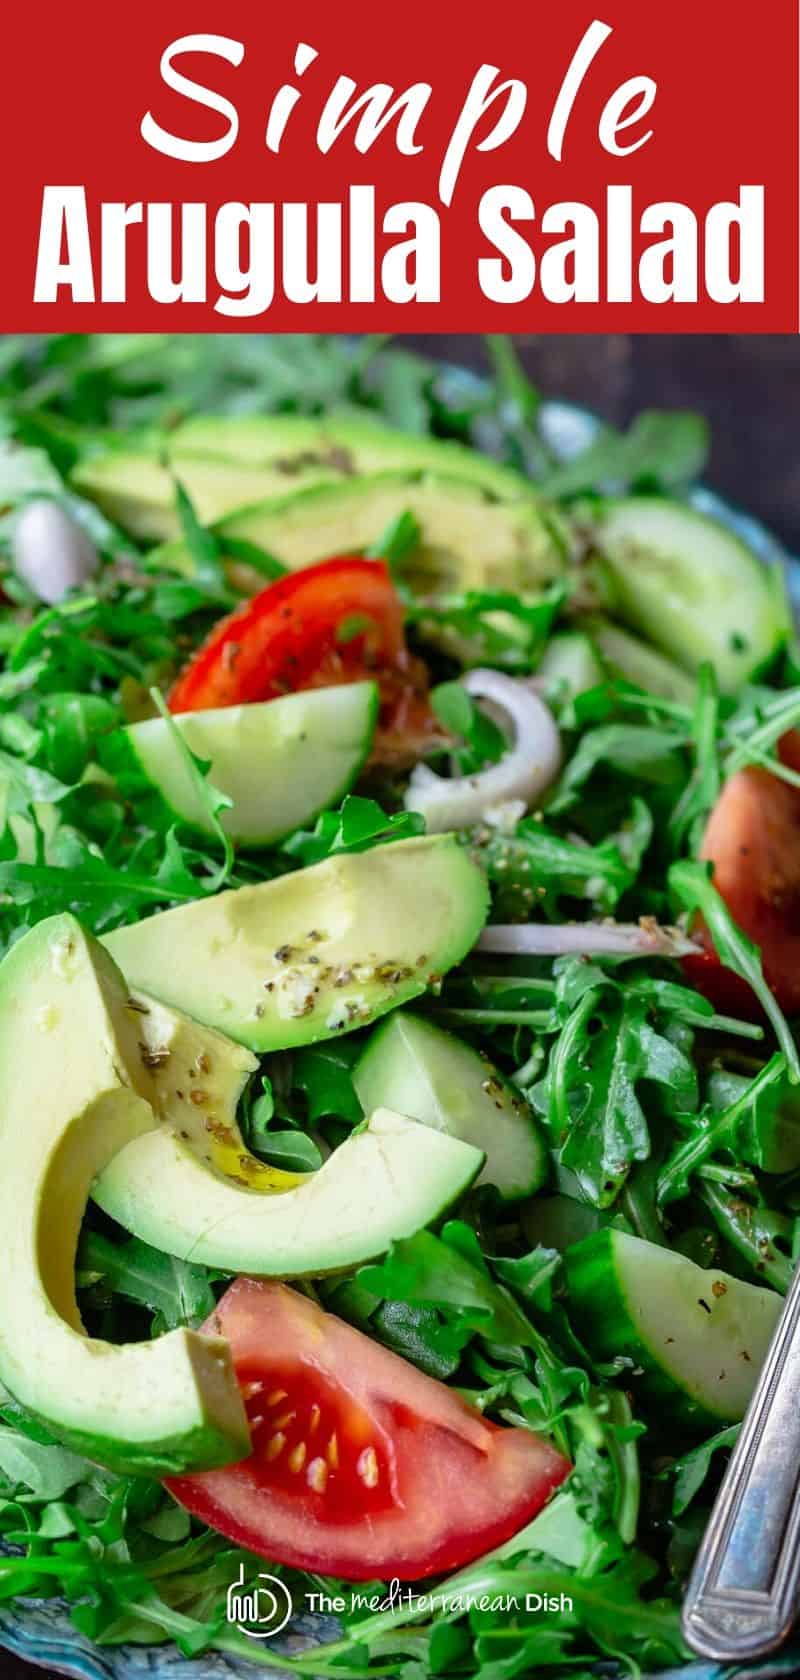 Simple Lemony Arugula Salad with Avocado | The Mediterranean Dish